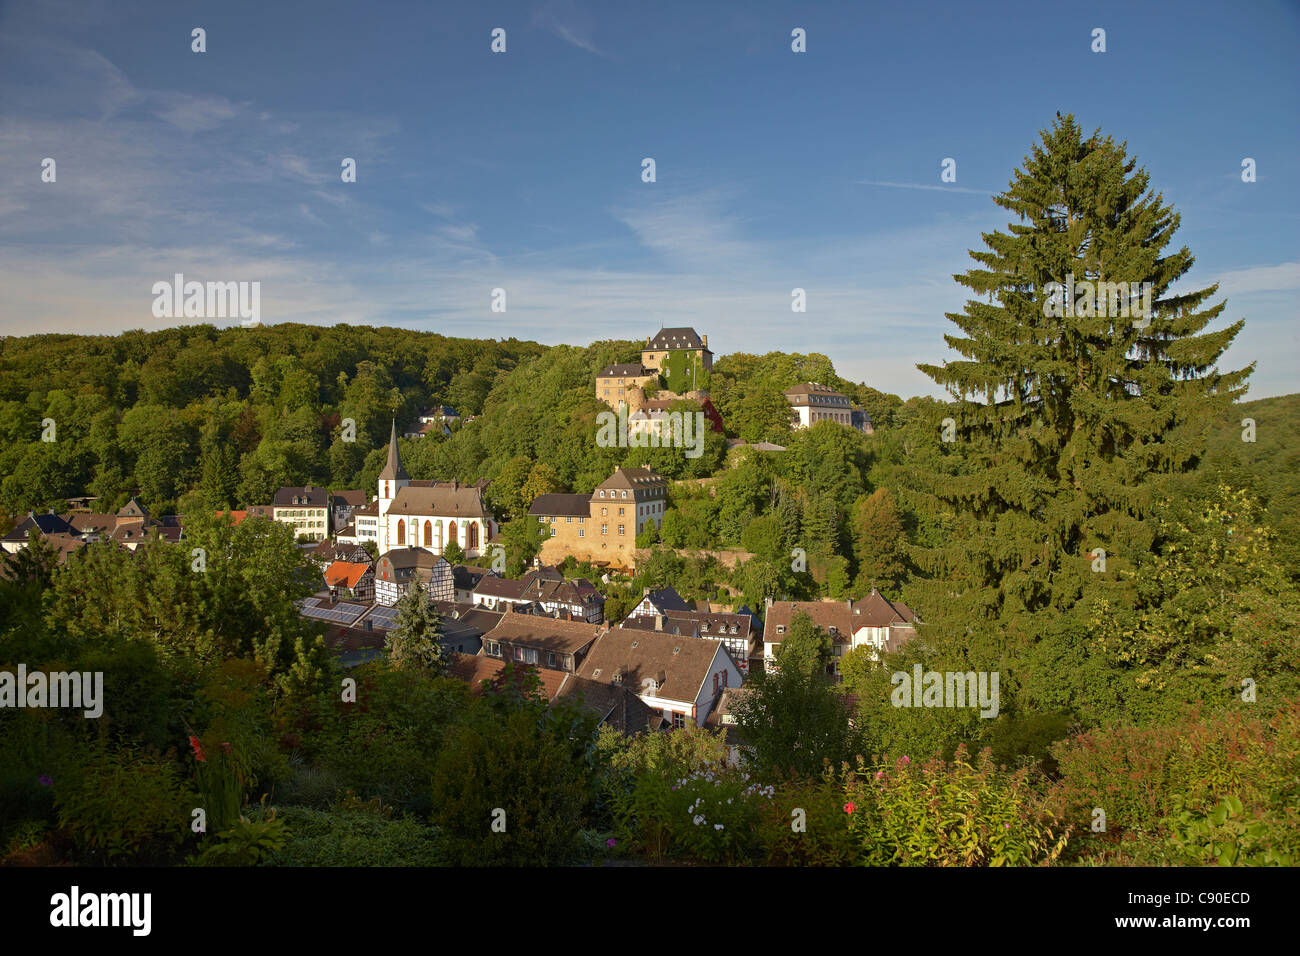 Castello, casa in legno e muratura, chiesa, S. Mariae assunta, Blankenheim, Eifel, Renania settentrionale-Vestfalia, Germania, Europa Foto Stock